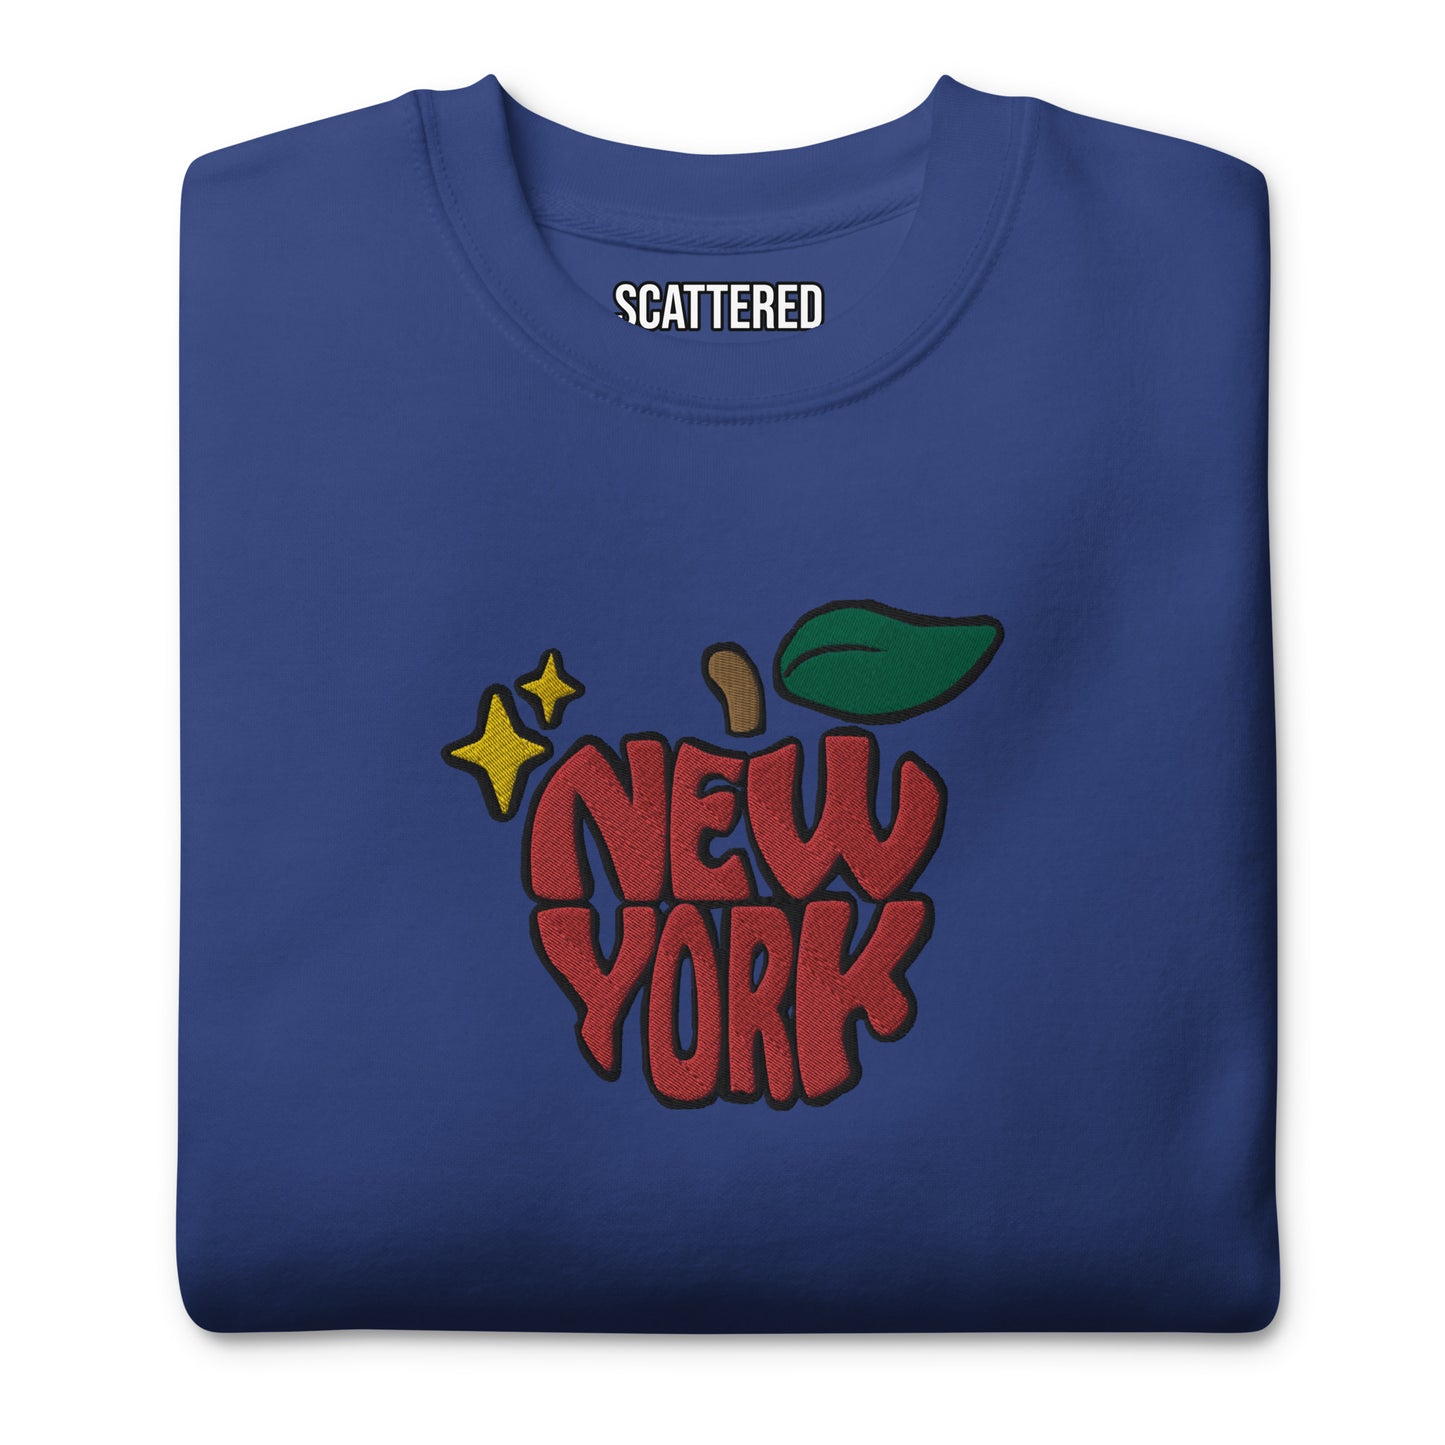 New York Apple Logo Embroidered Royal Blue Crewneck Sweatshirt Scattered Streetwear